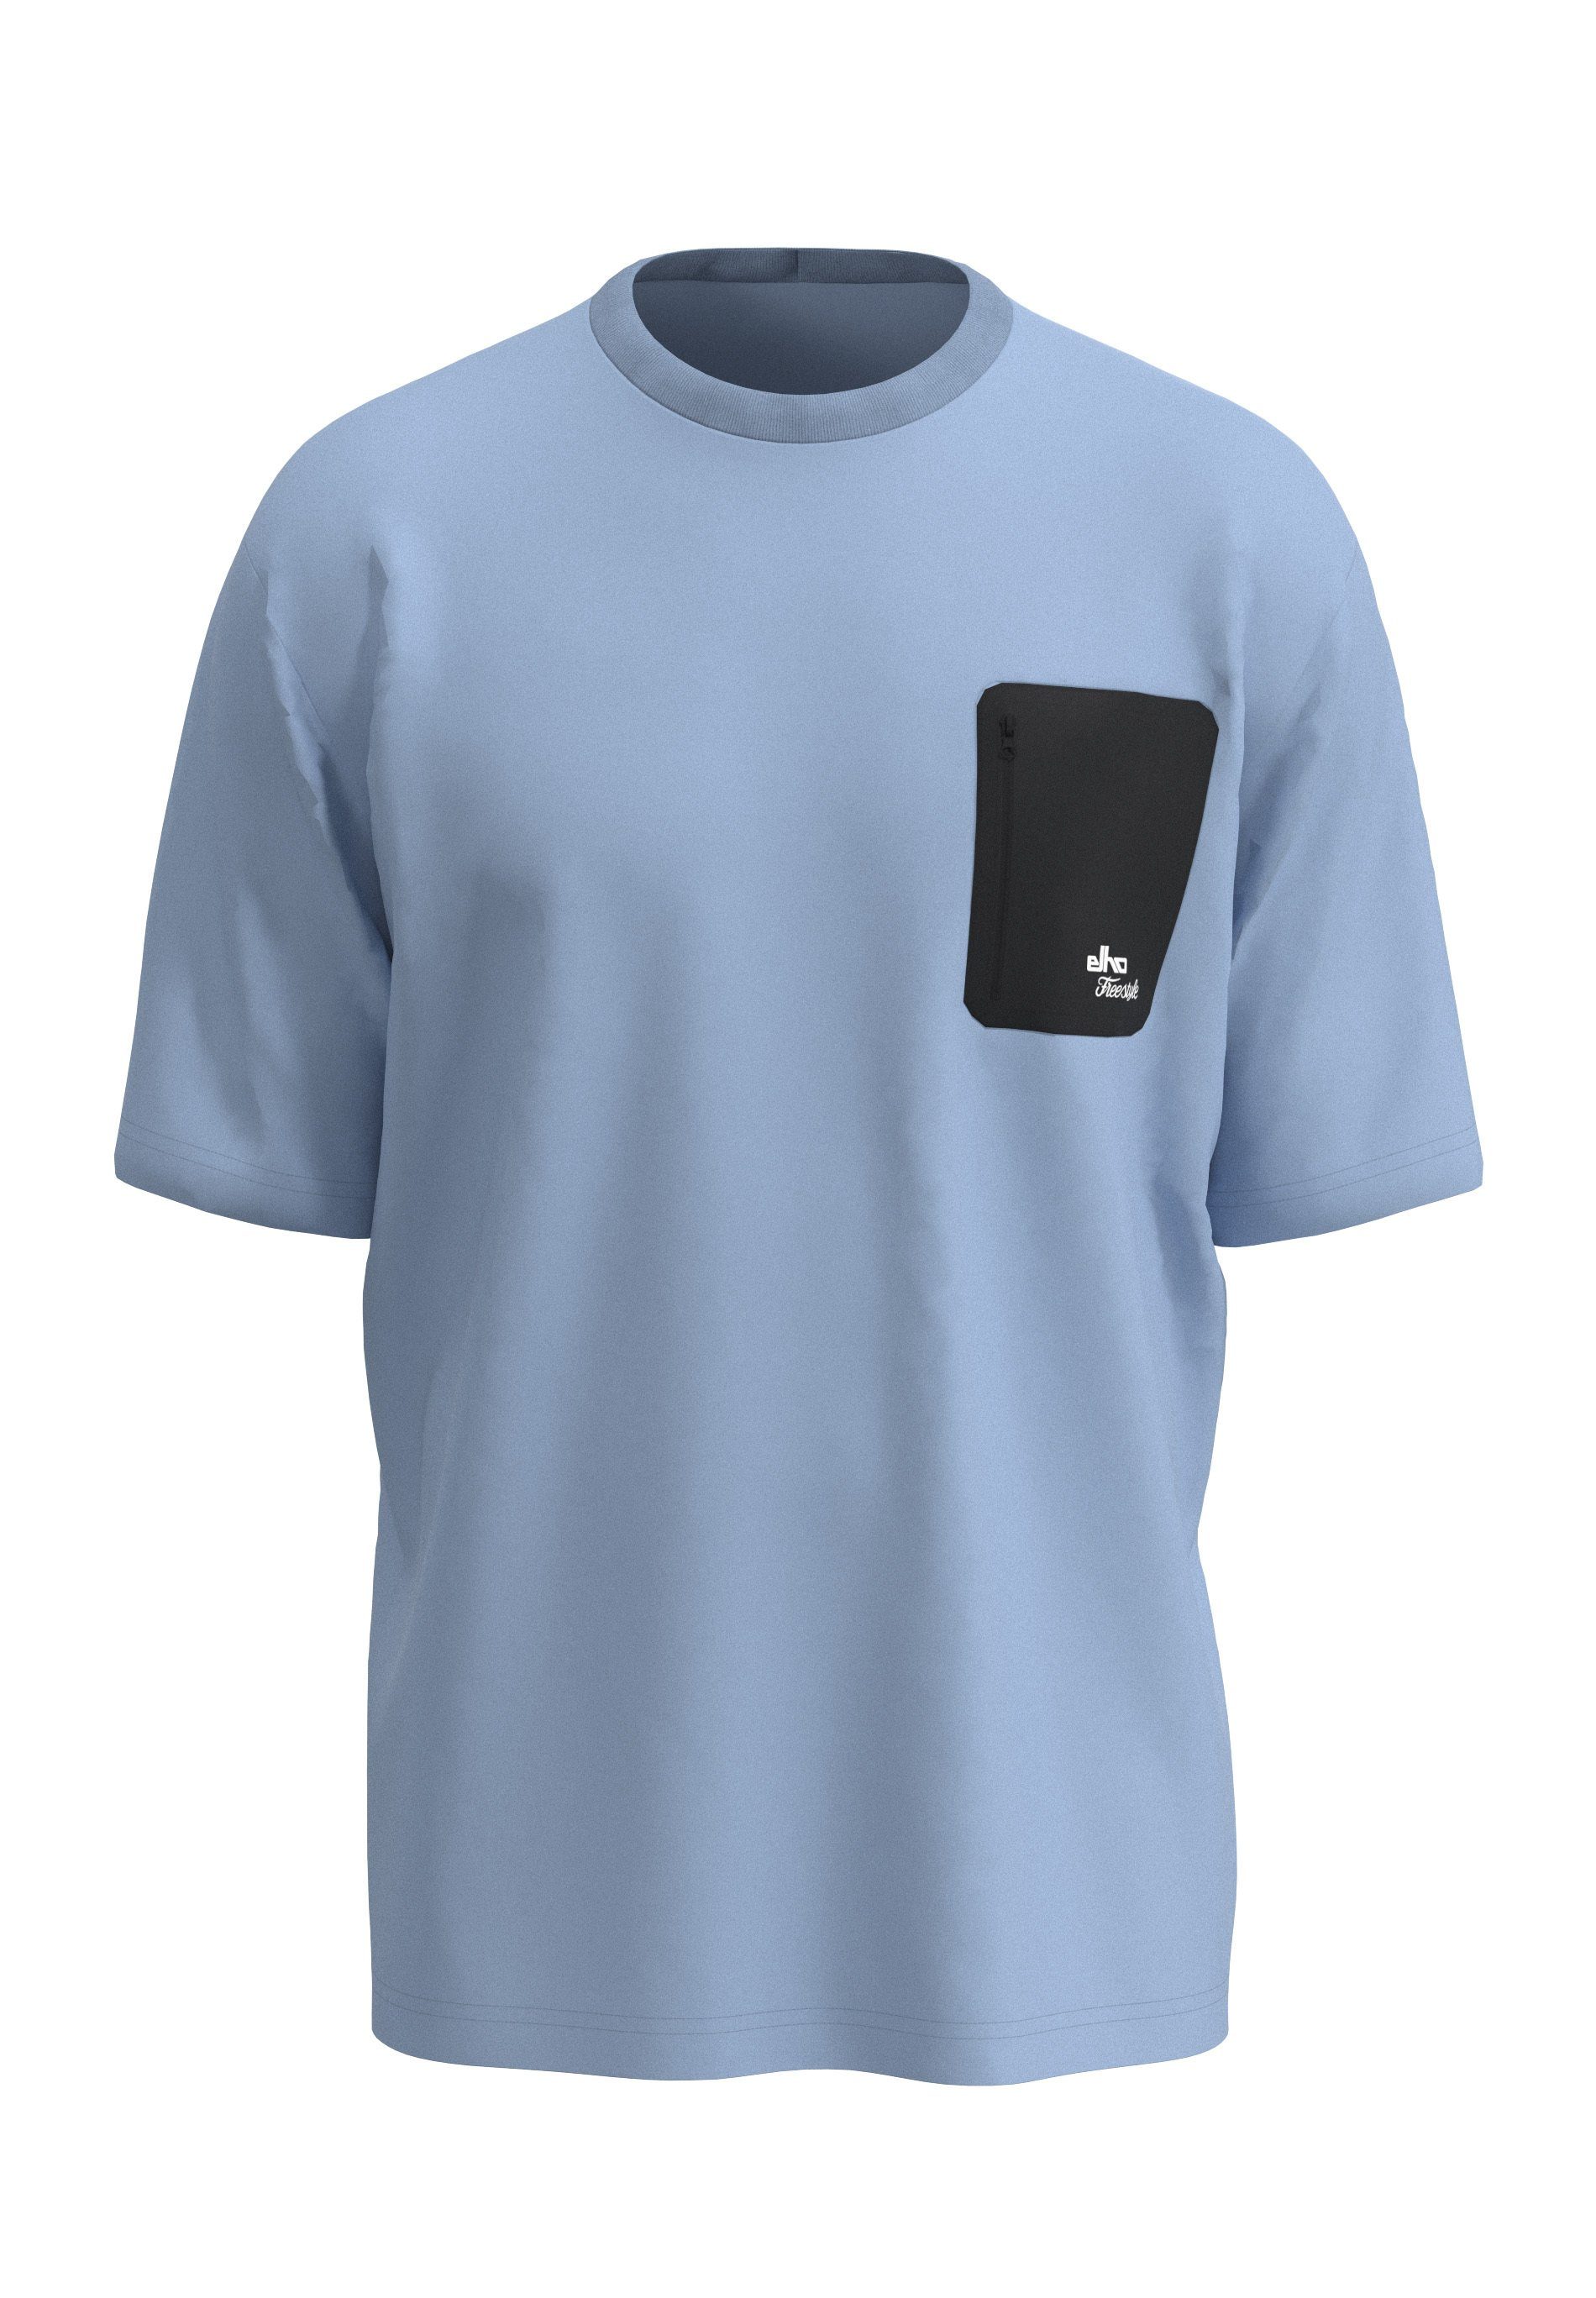 89 AMALFI Hellblau Elho T-Shirt